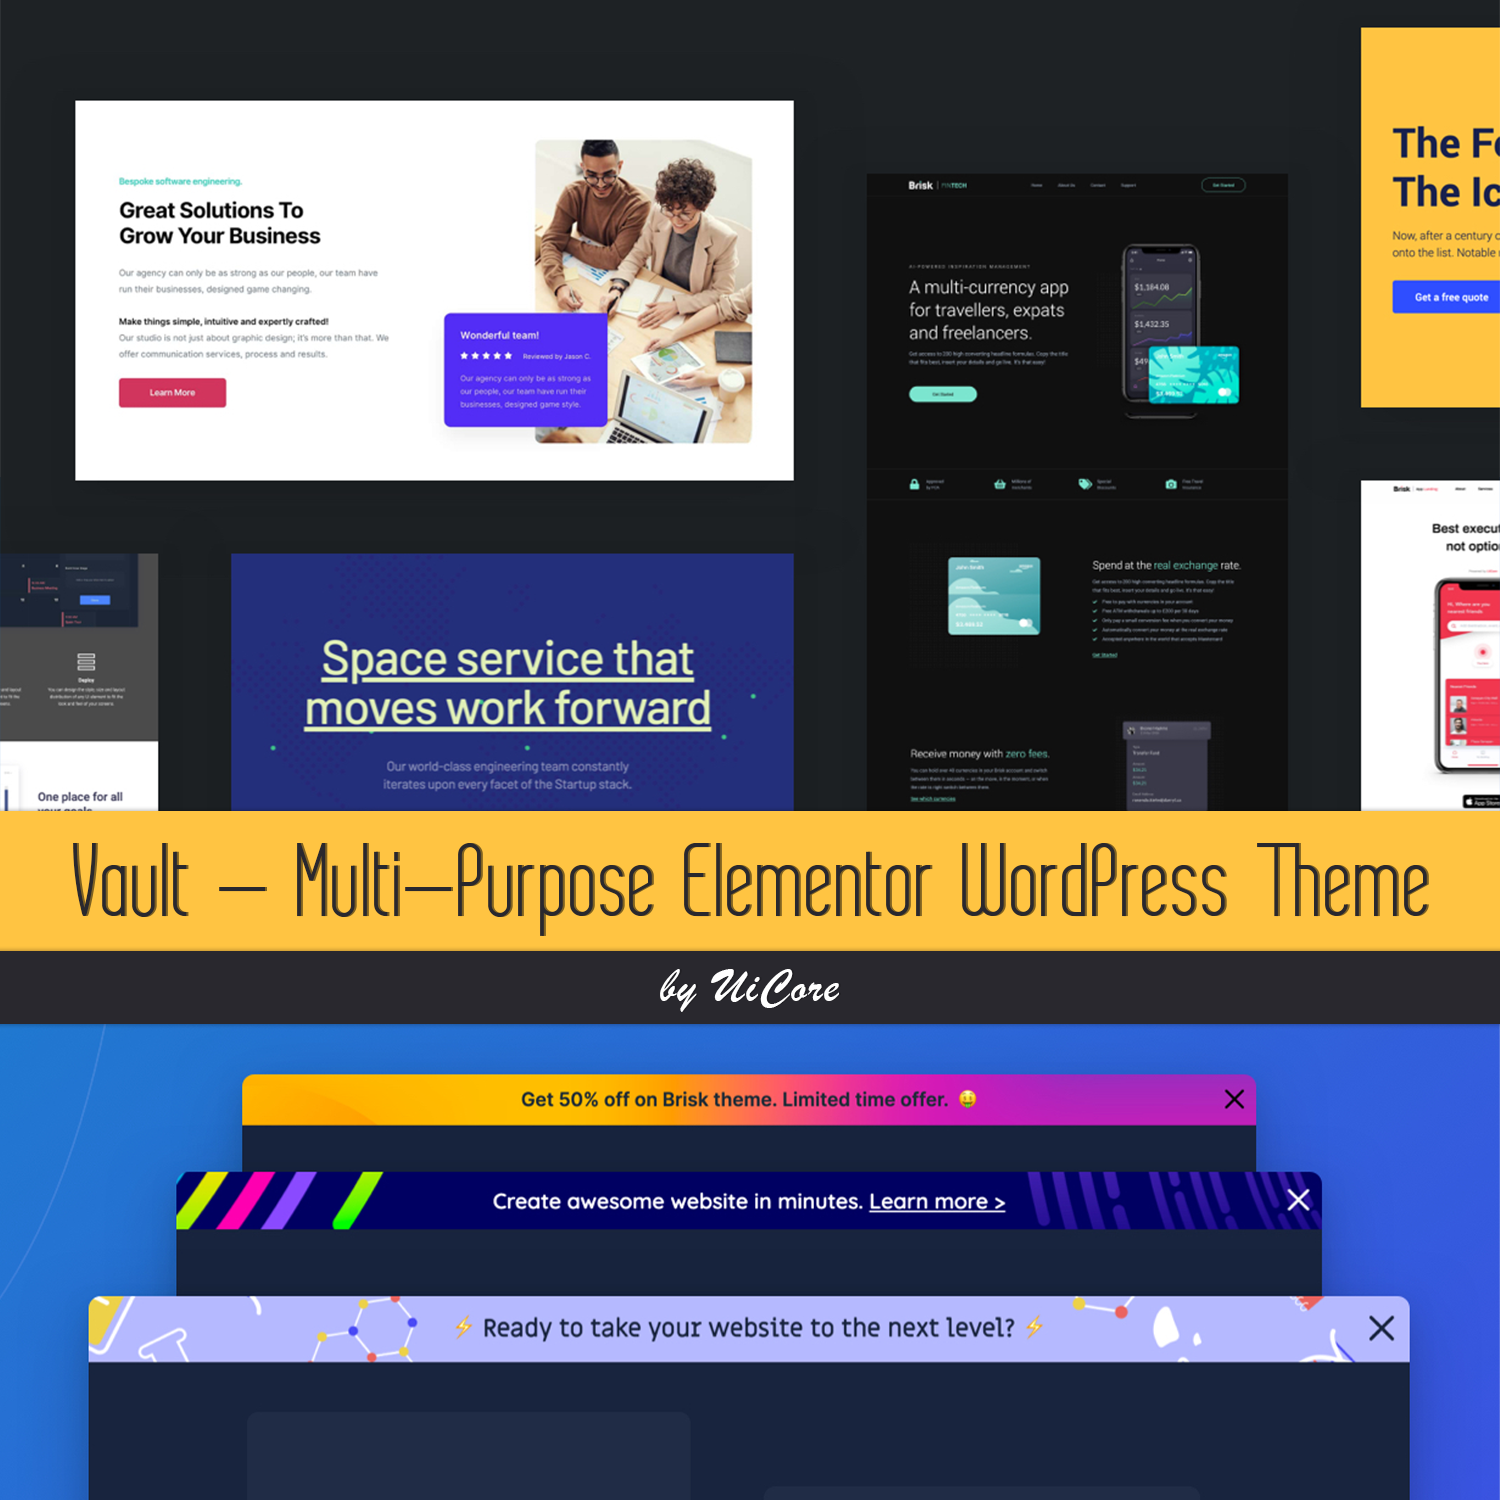 Vault - Multi-Purpose Elementor WordPress Theme cover.